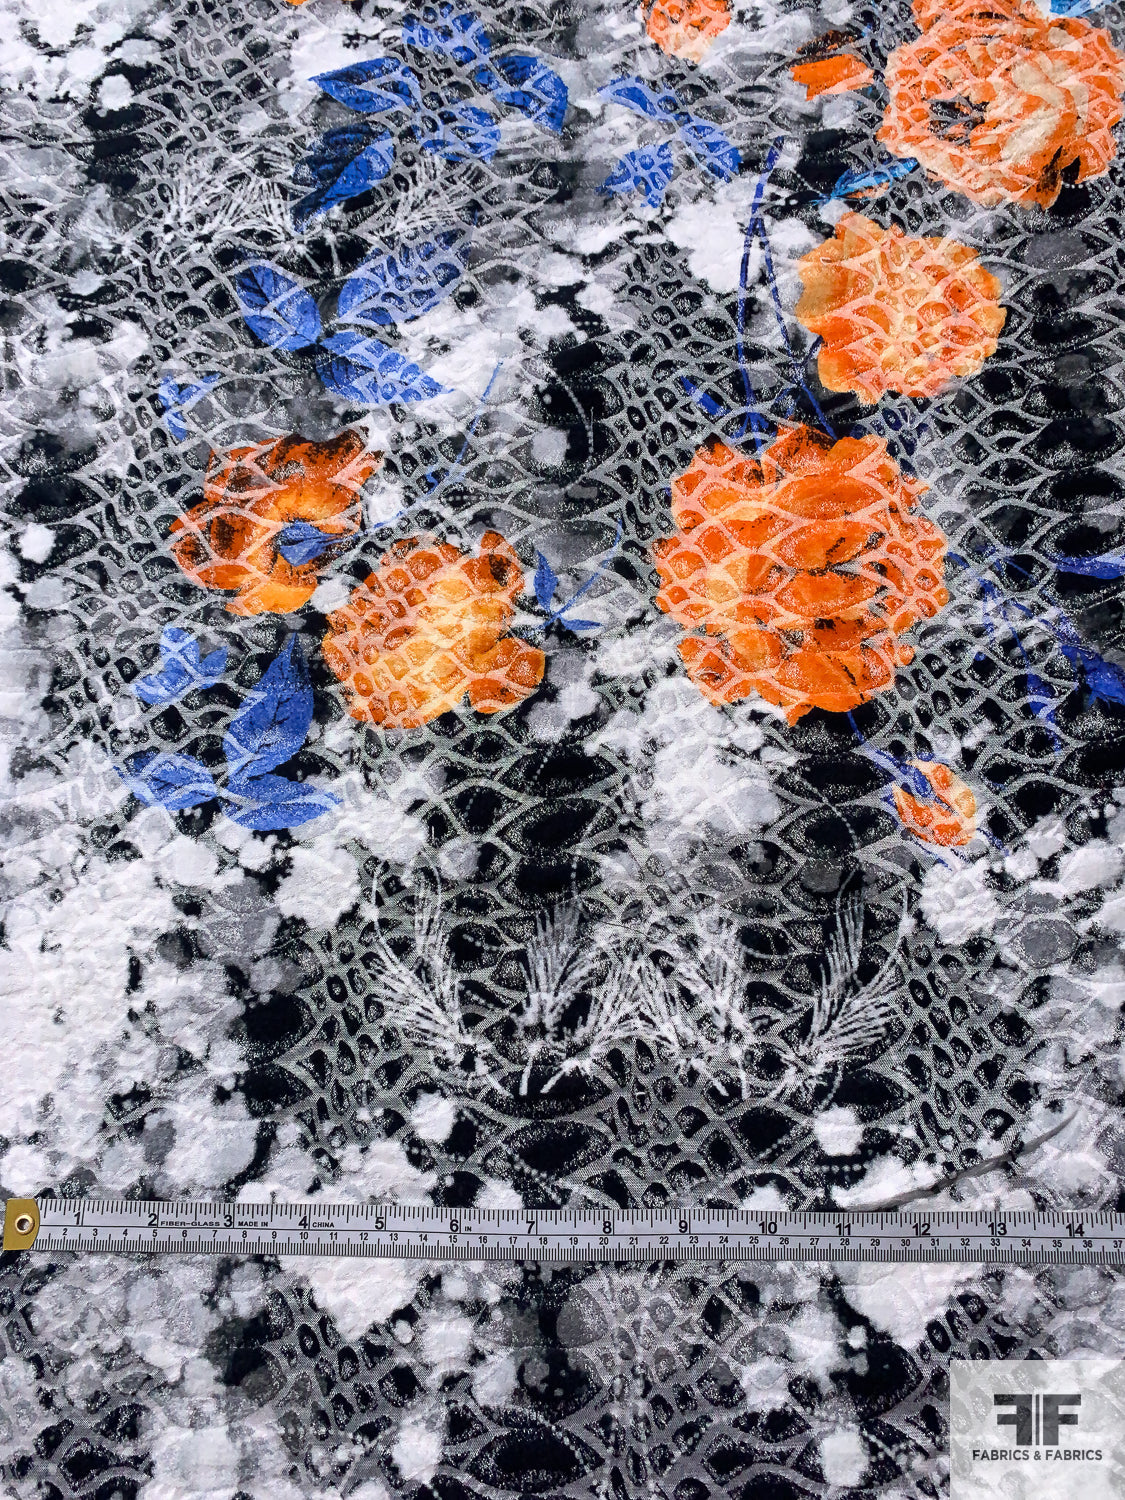 Floral and Alligator Skin Printed Brocade with Mechanical Stretch Panel - Orange / Blue / Black / Off-White / Grey